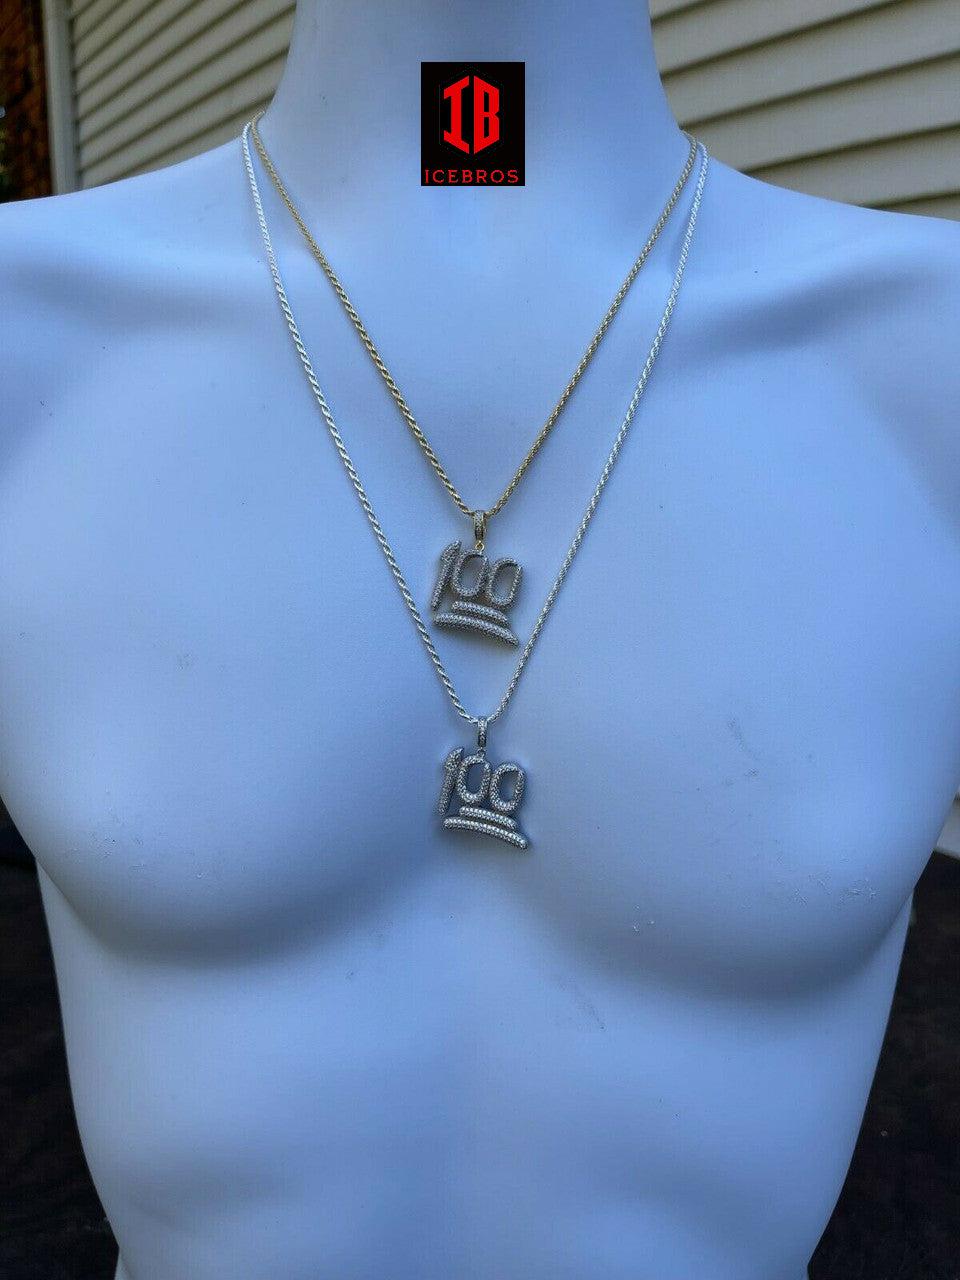 Keep It 100 Hundred Iced Diamond Hip Hop Pendant Necklace Real Vermeil